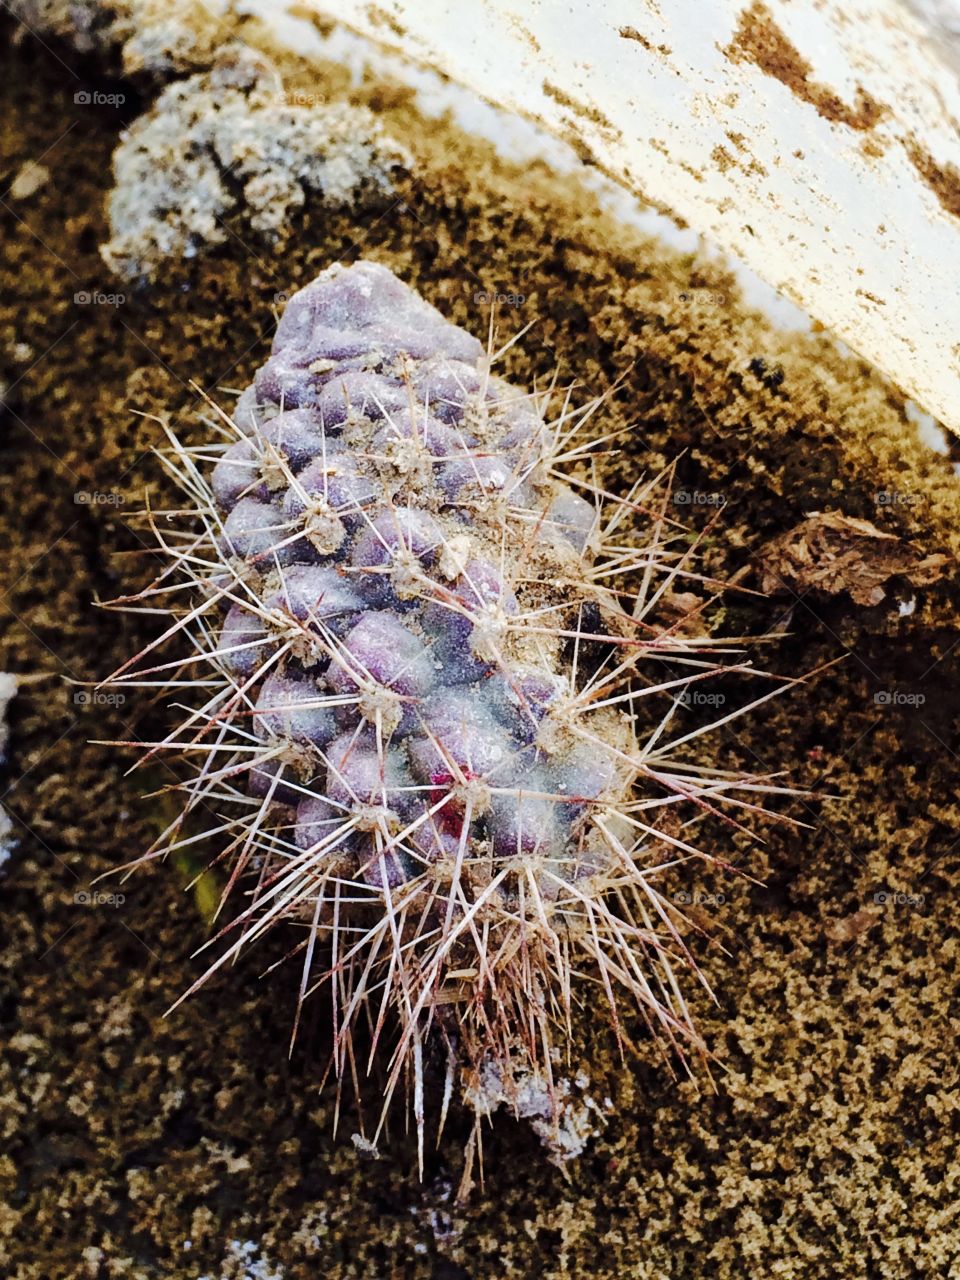 Sharp cactus